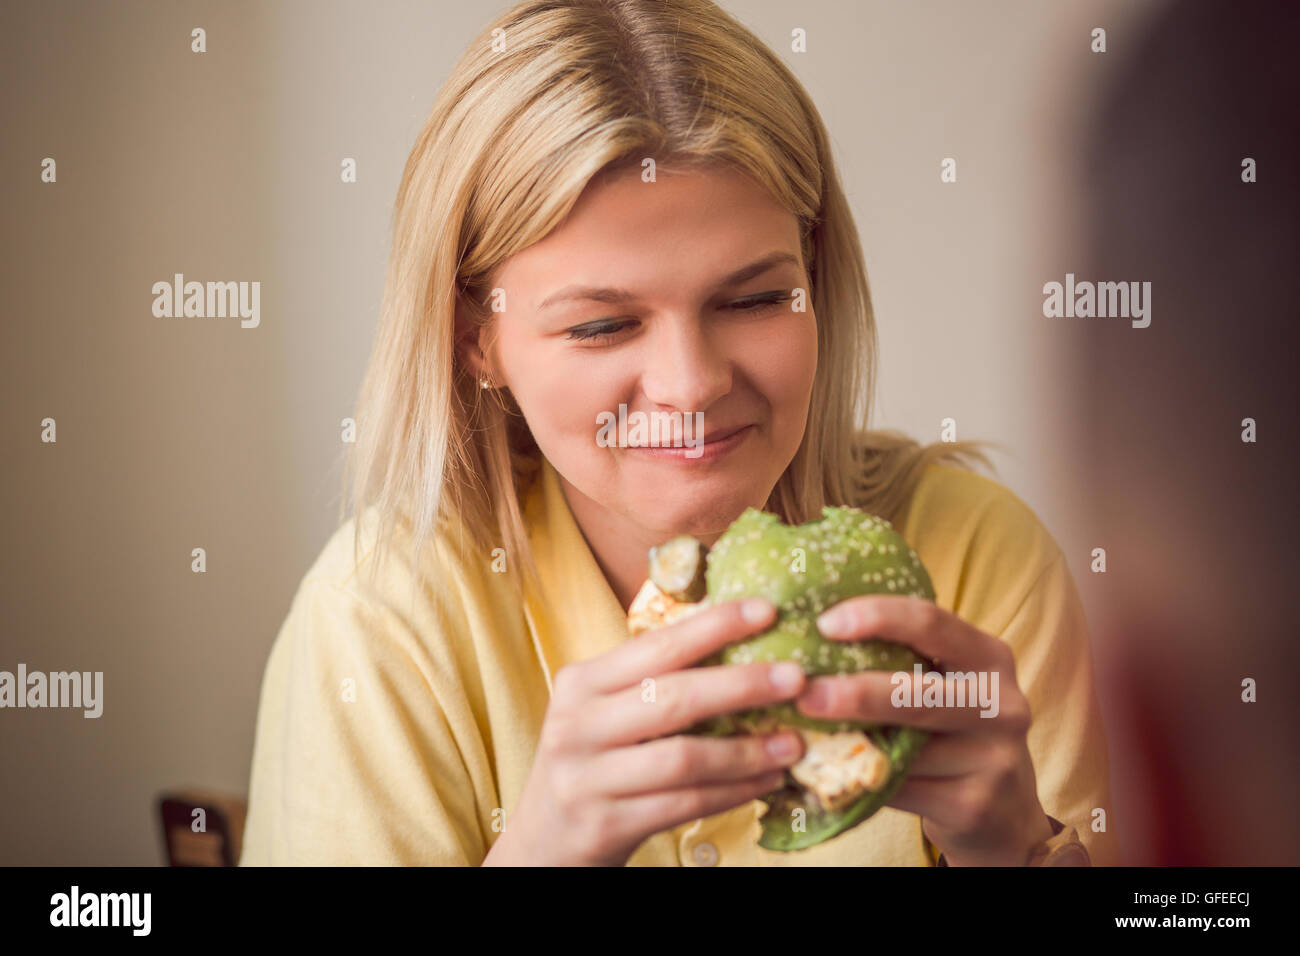 Woman eating vegan burger in restaurant Stock Photo